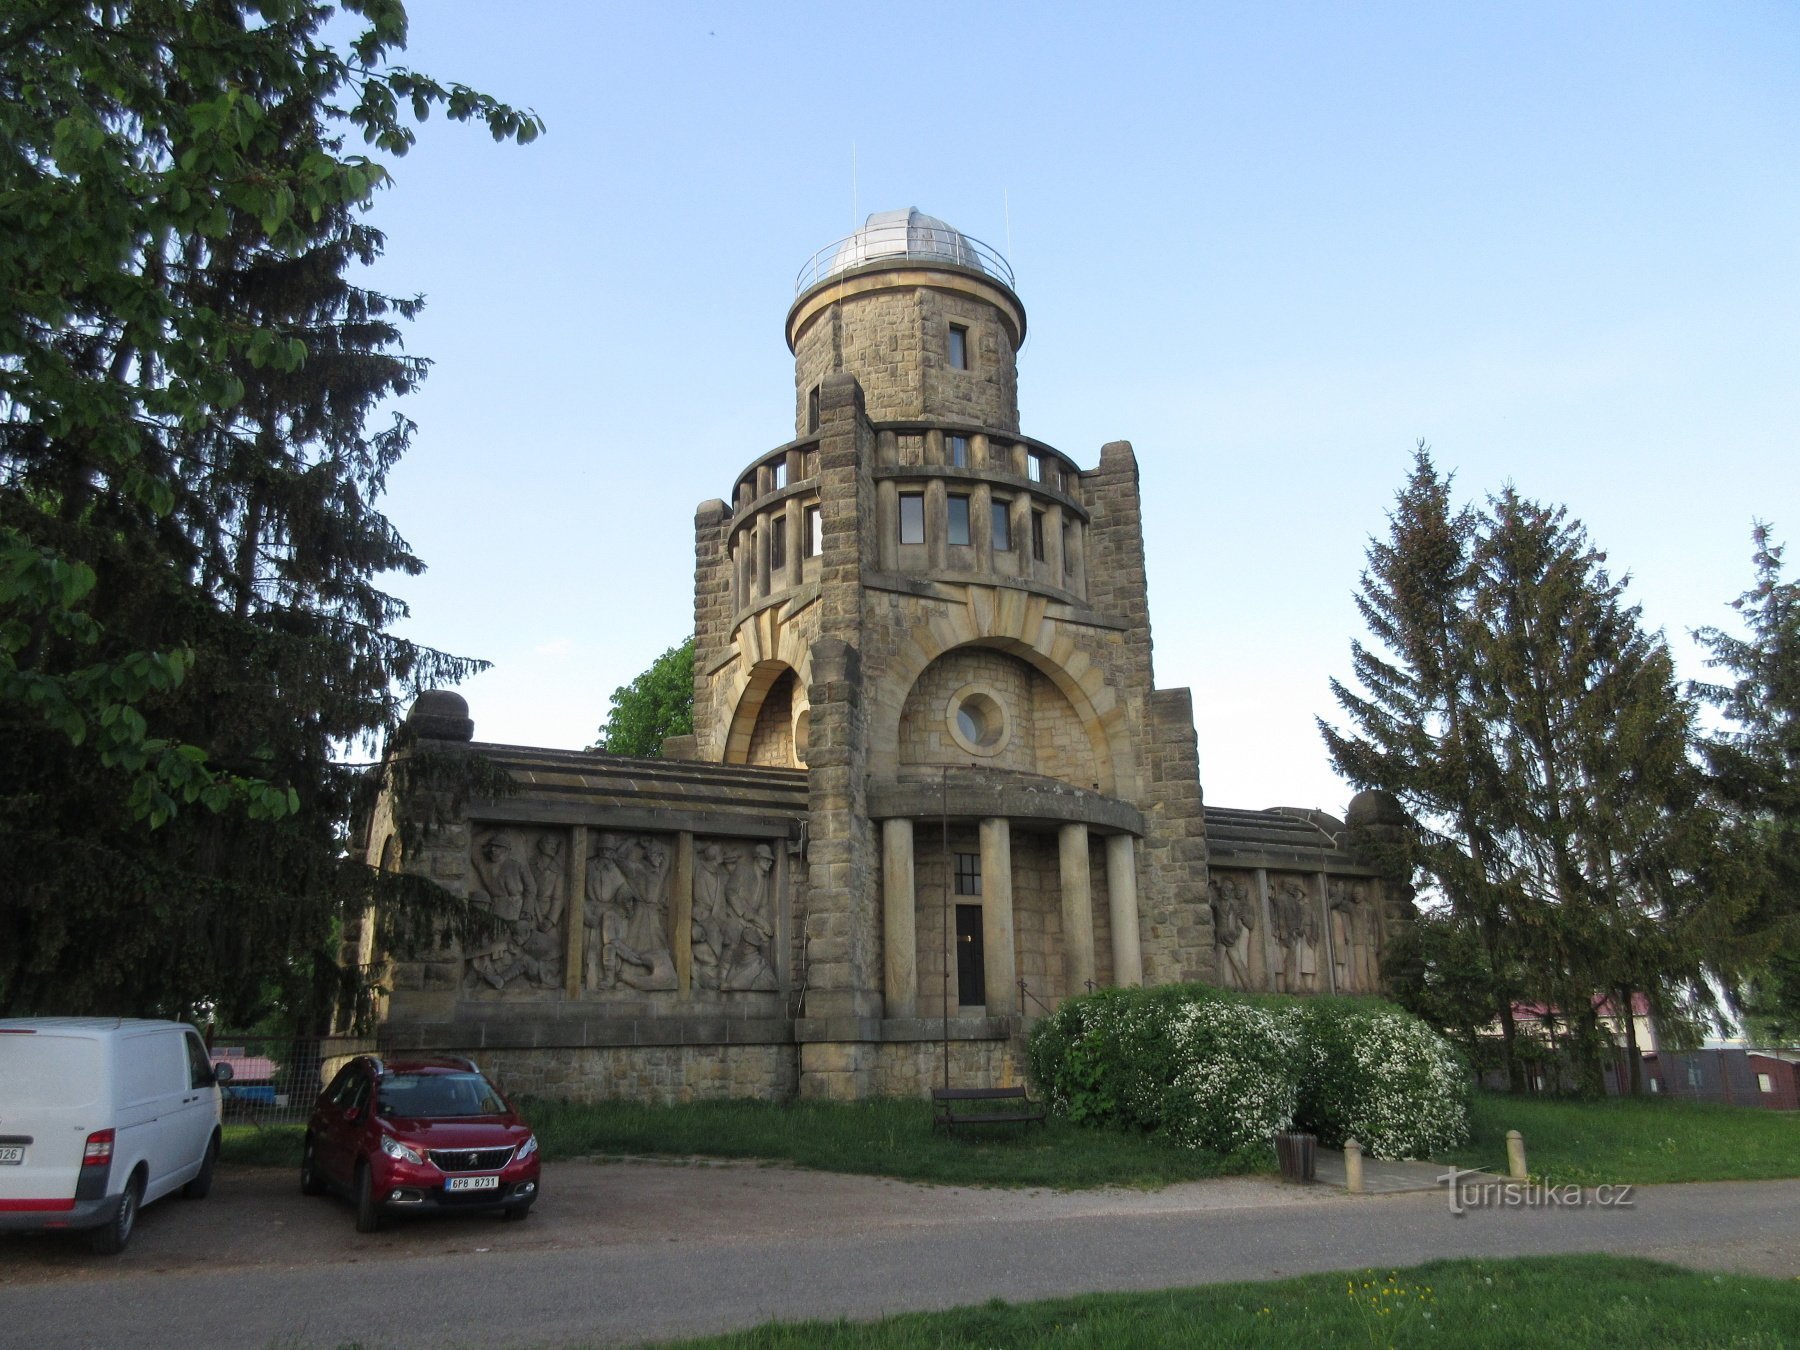 Masaryk's Tower of Independence in Hořice in Podkrkonoší